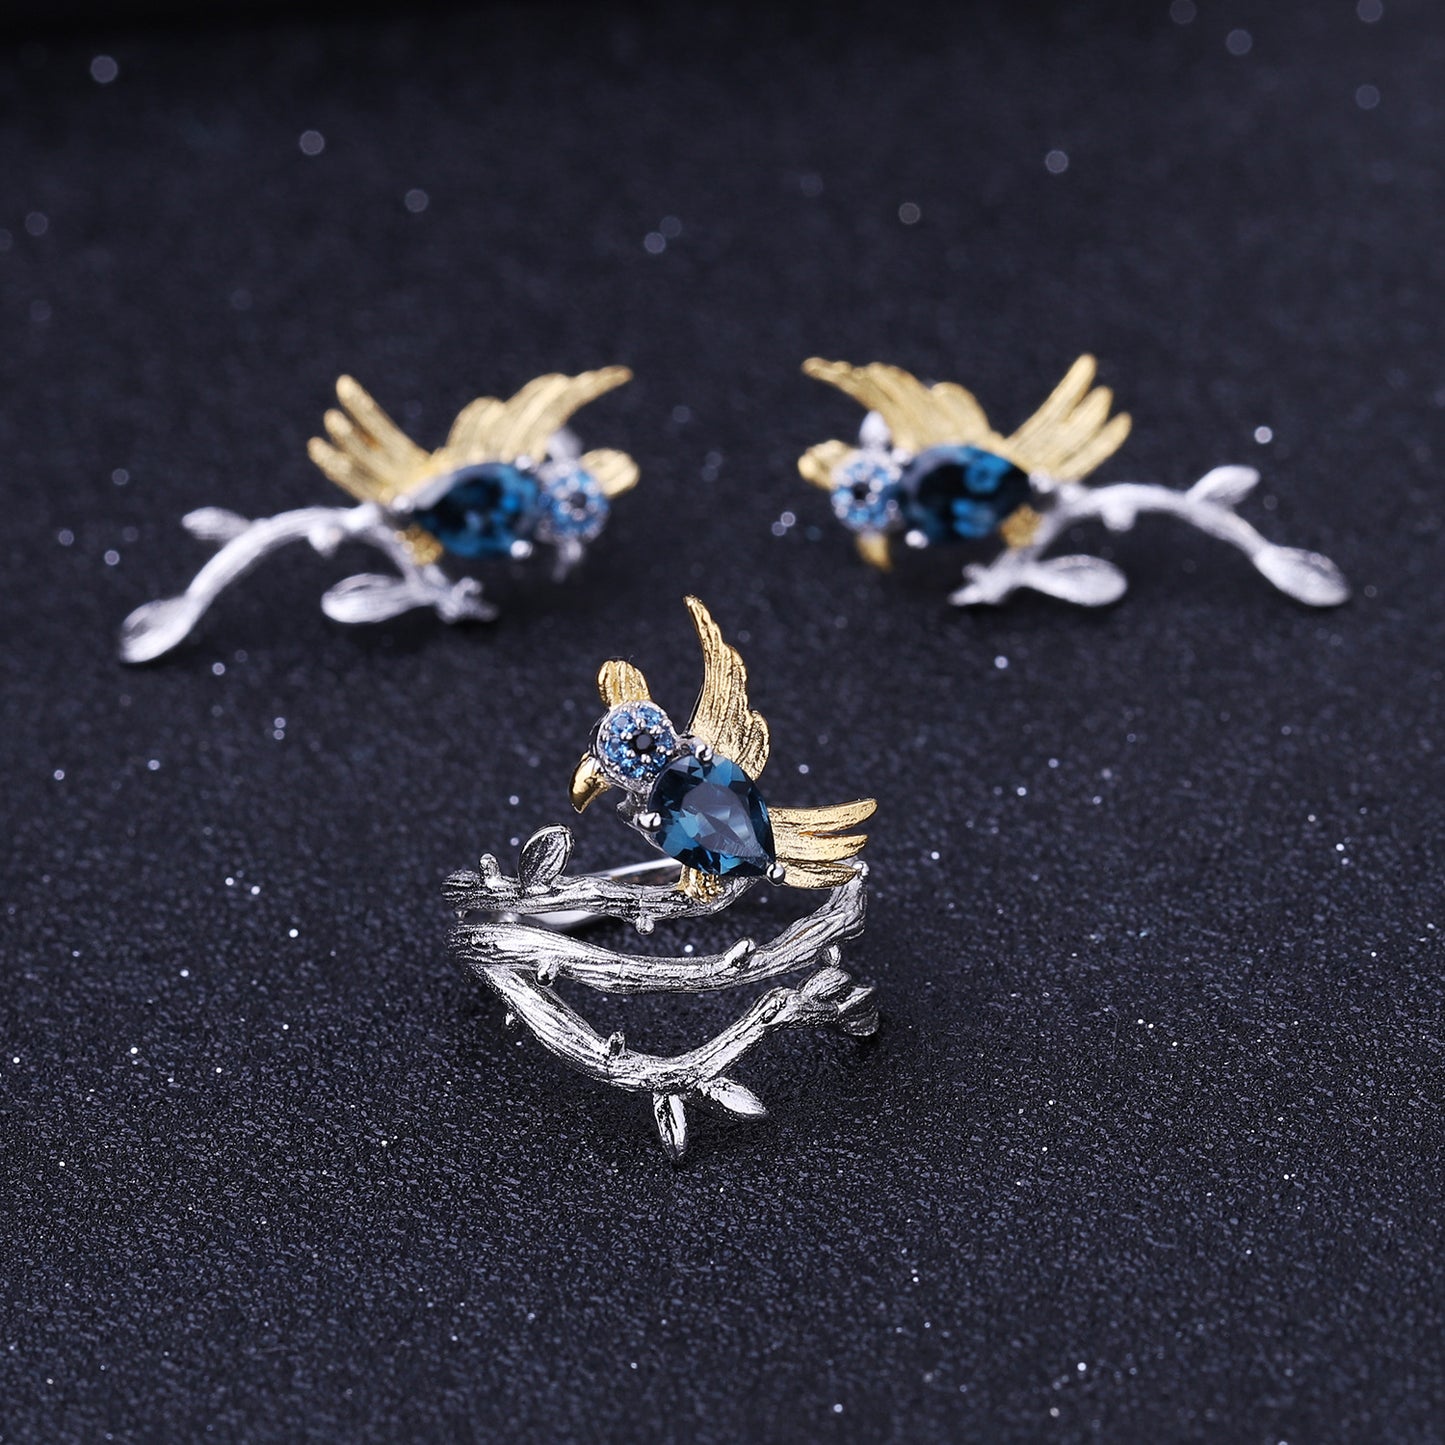 Magpie Design 925 Silver Natural London Blue Topaz Earrings for Women